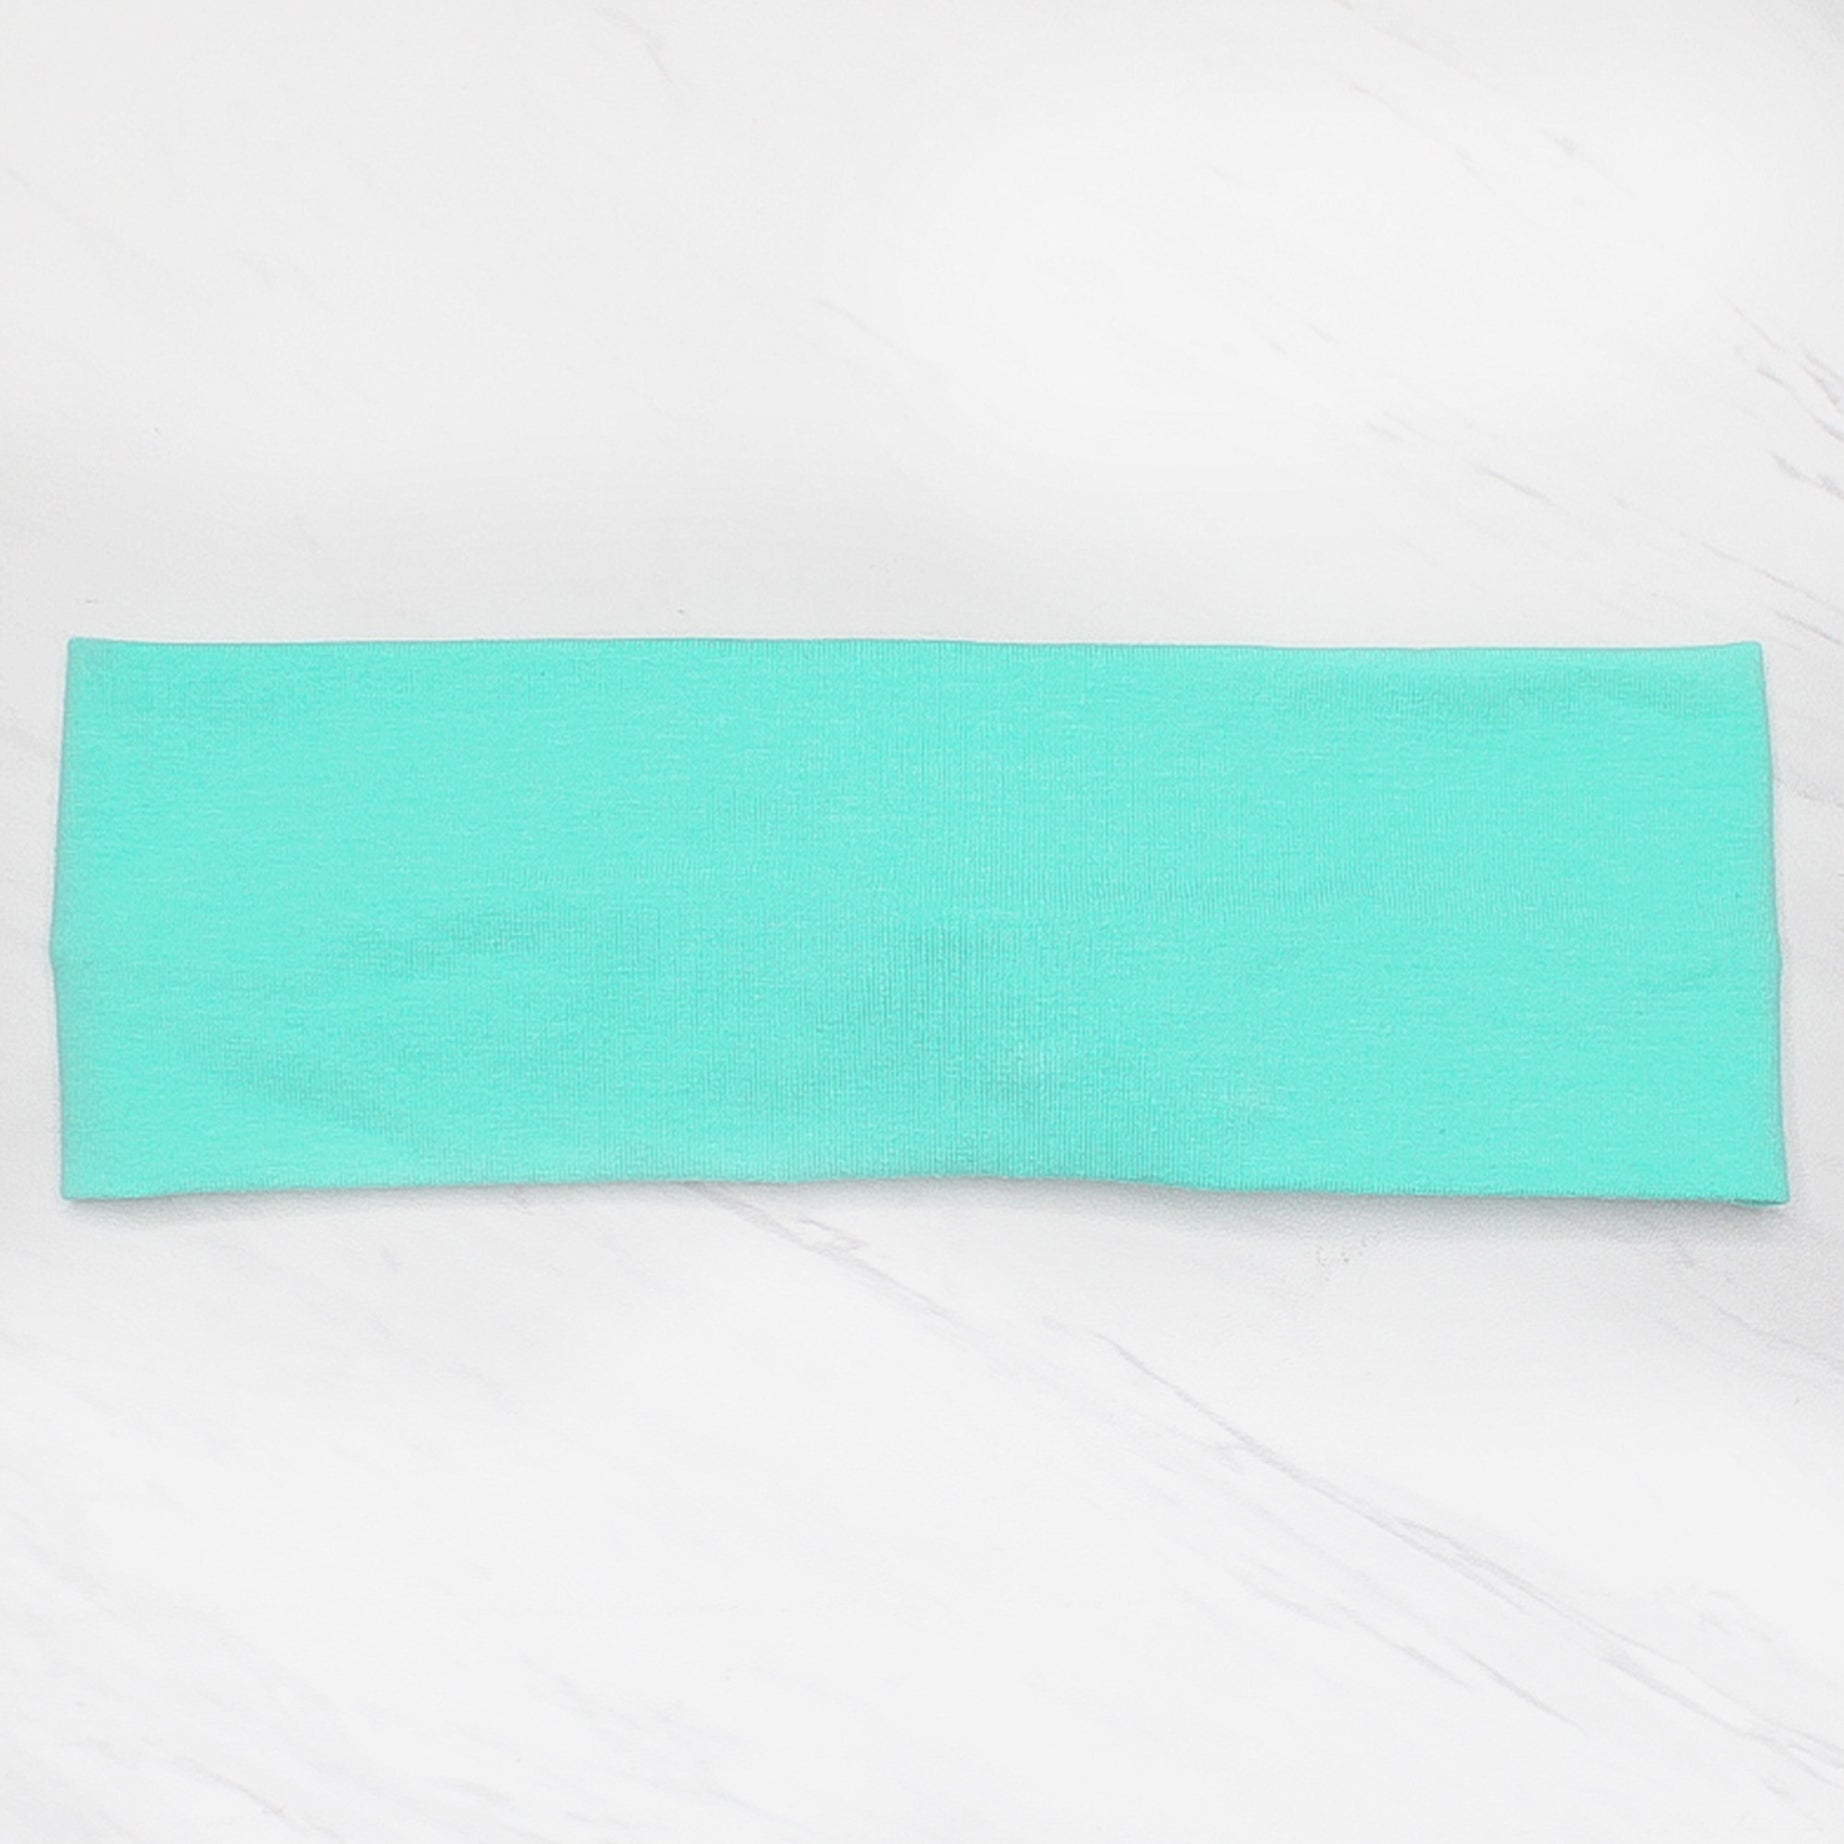 Solid Turquoise Headband, Cotton Spandex